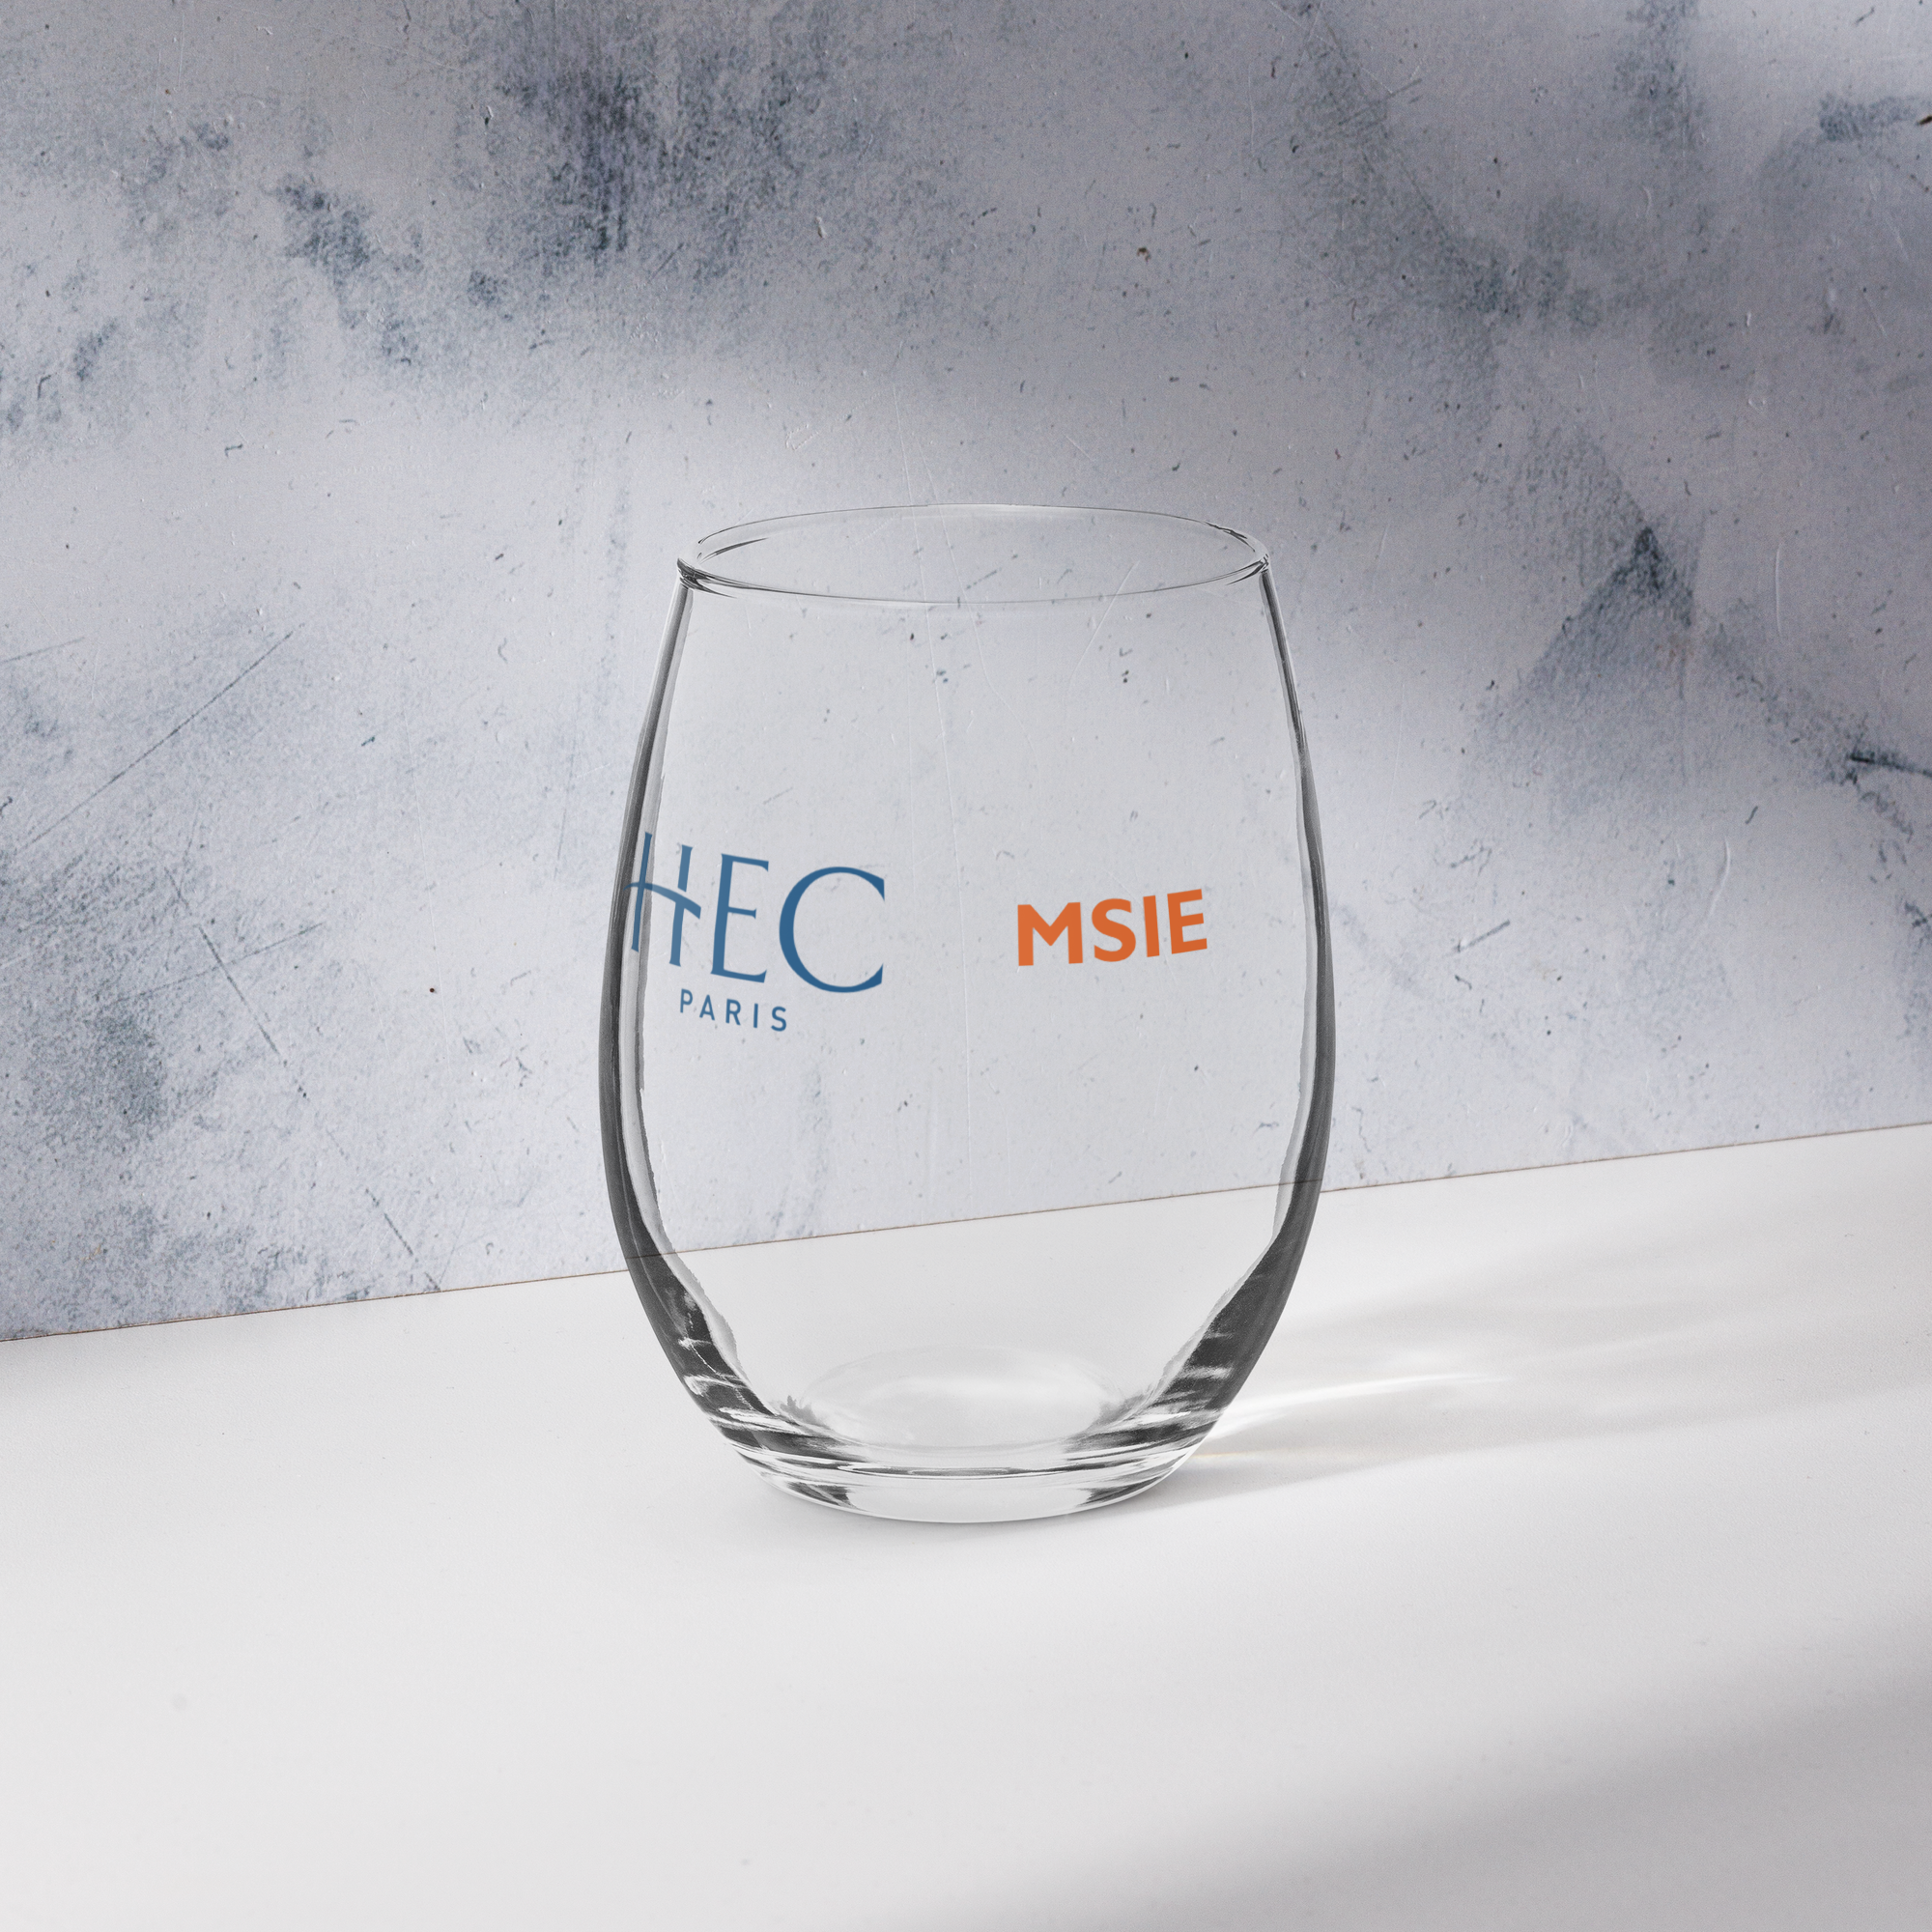 HEC Paris MSIE Stemless Glass